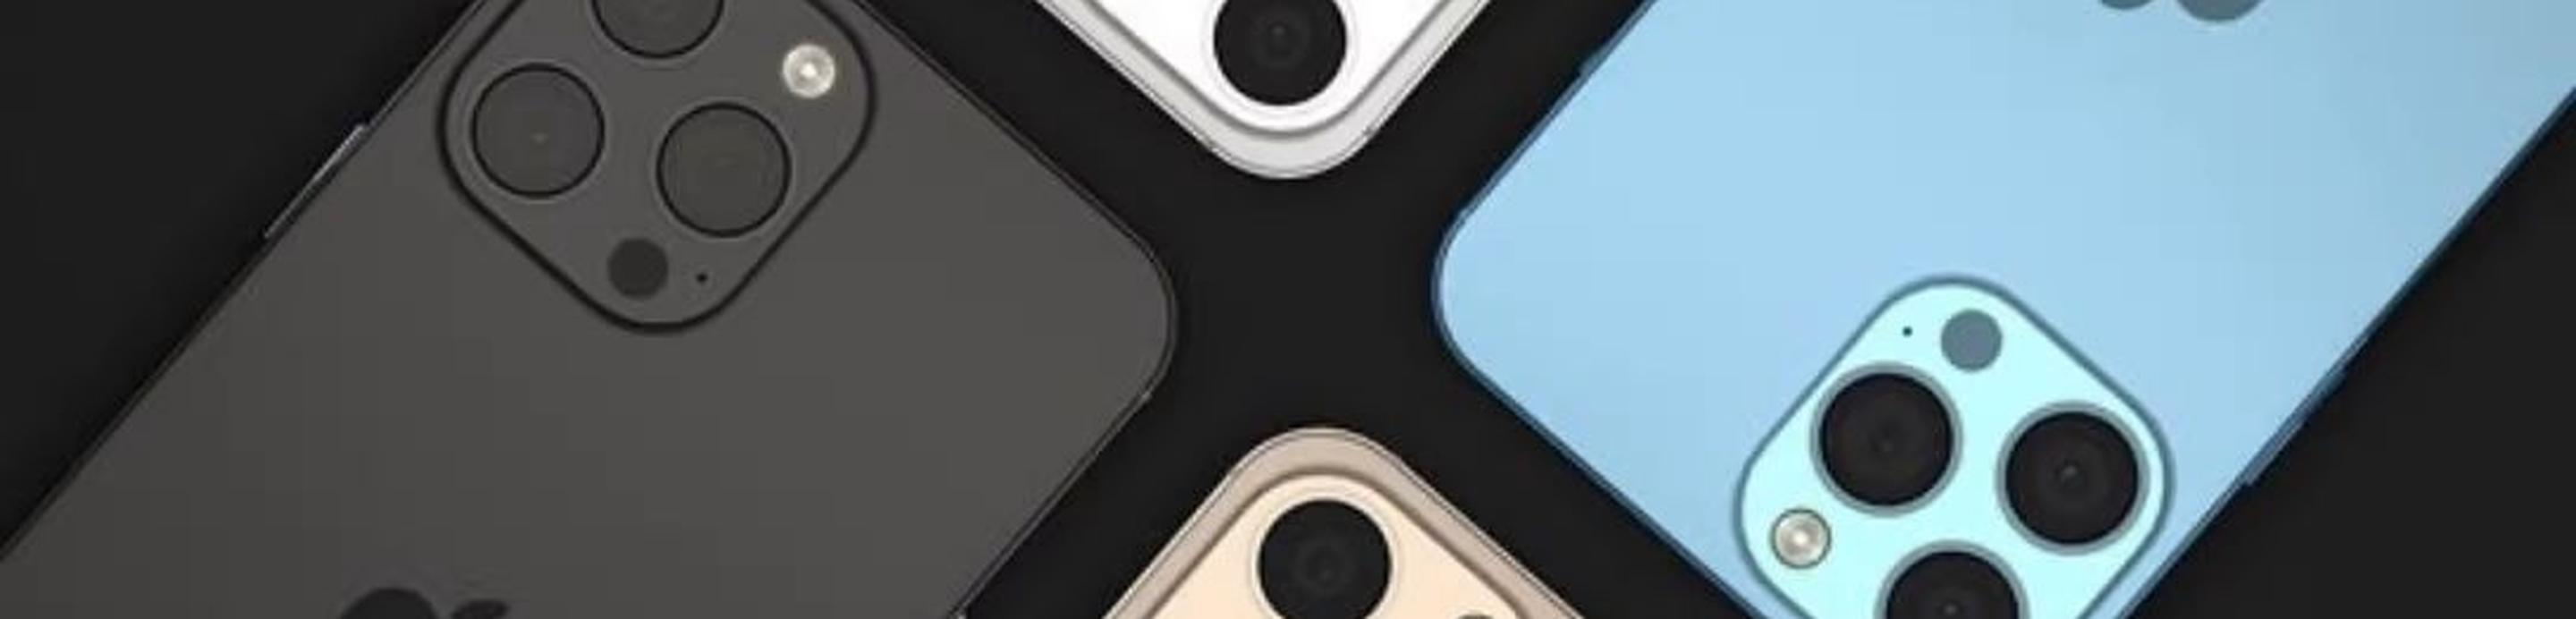 iphone 13 de colores